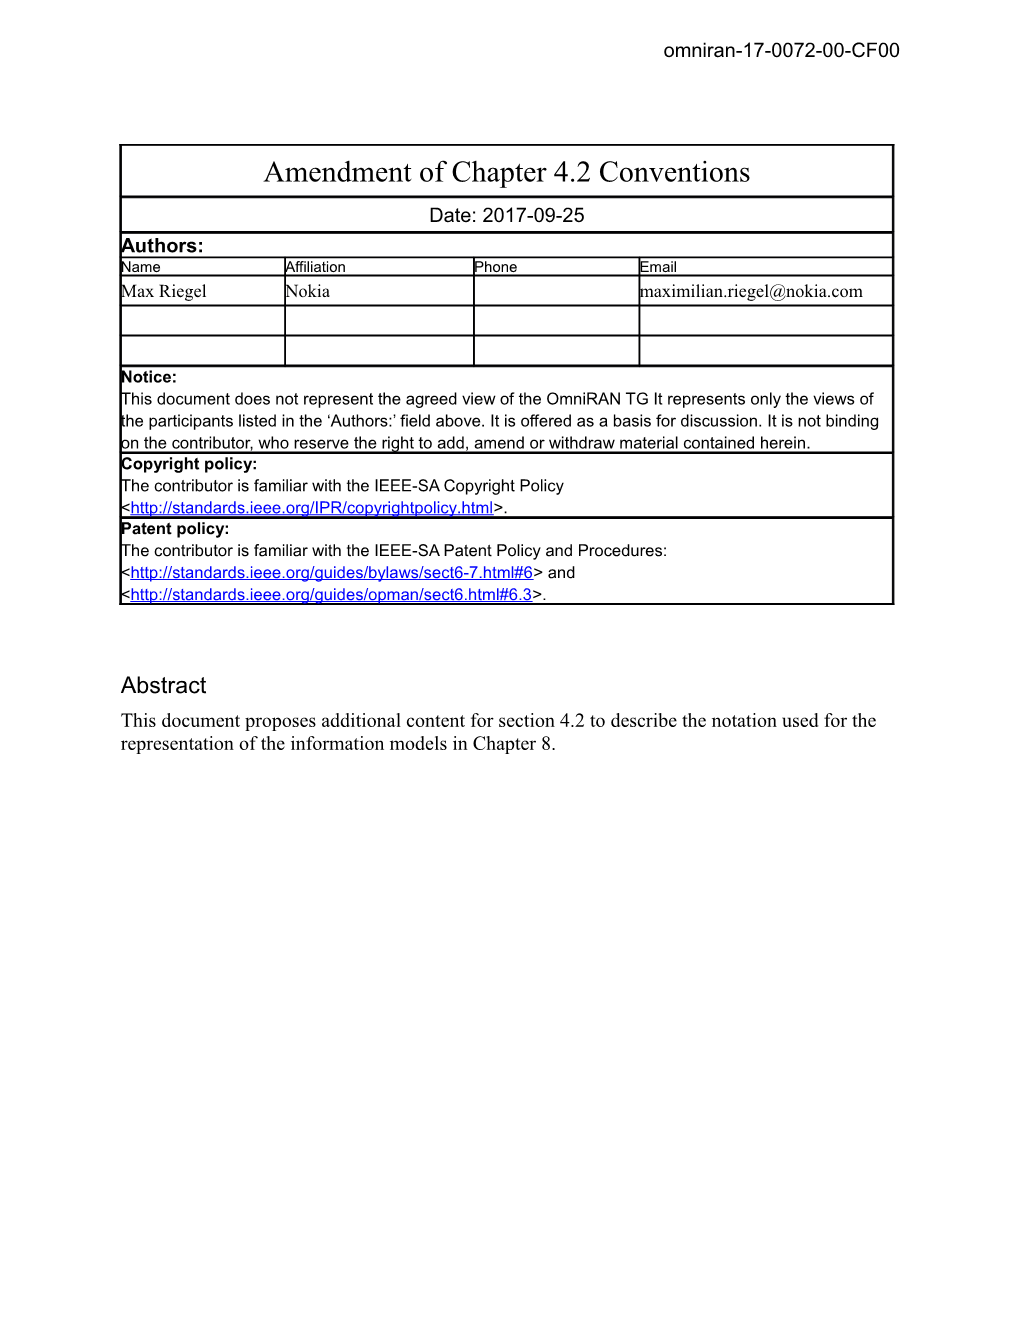 IEEE 802.16 Mentor Document Template s7